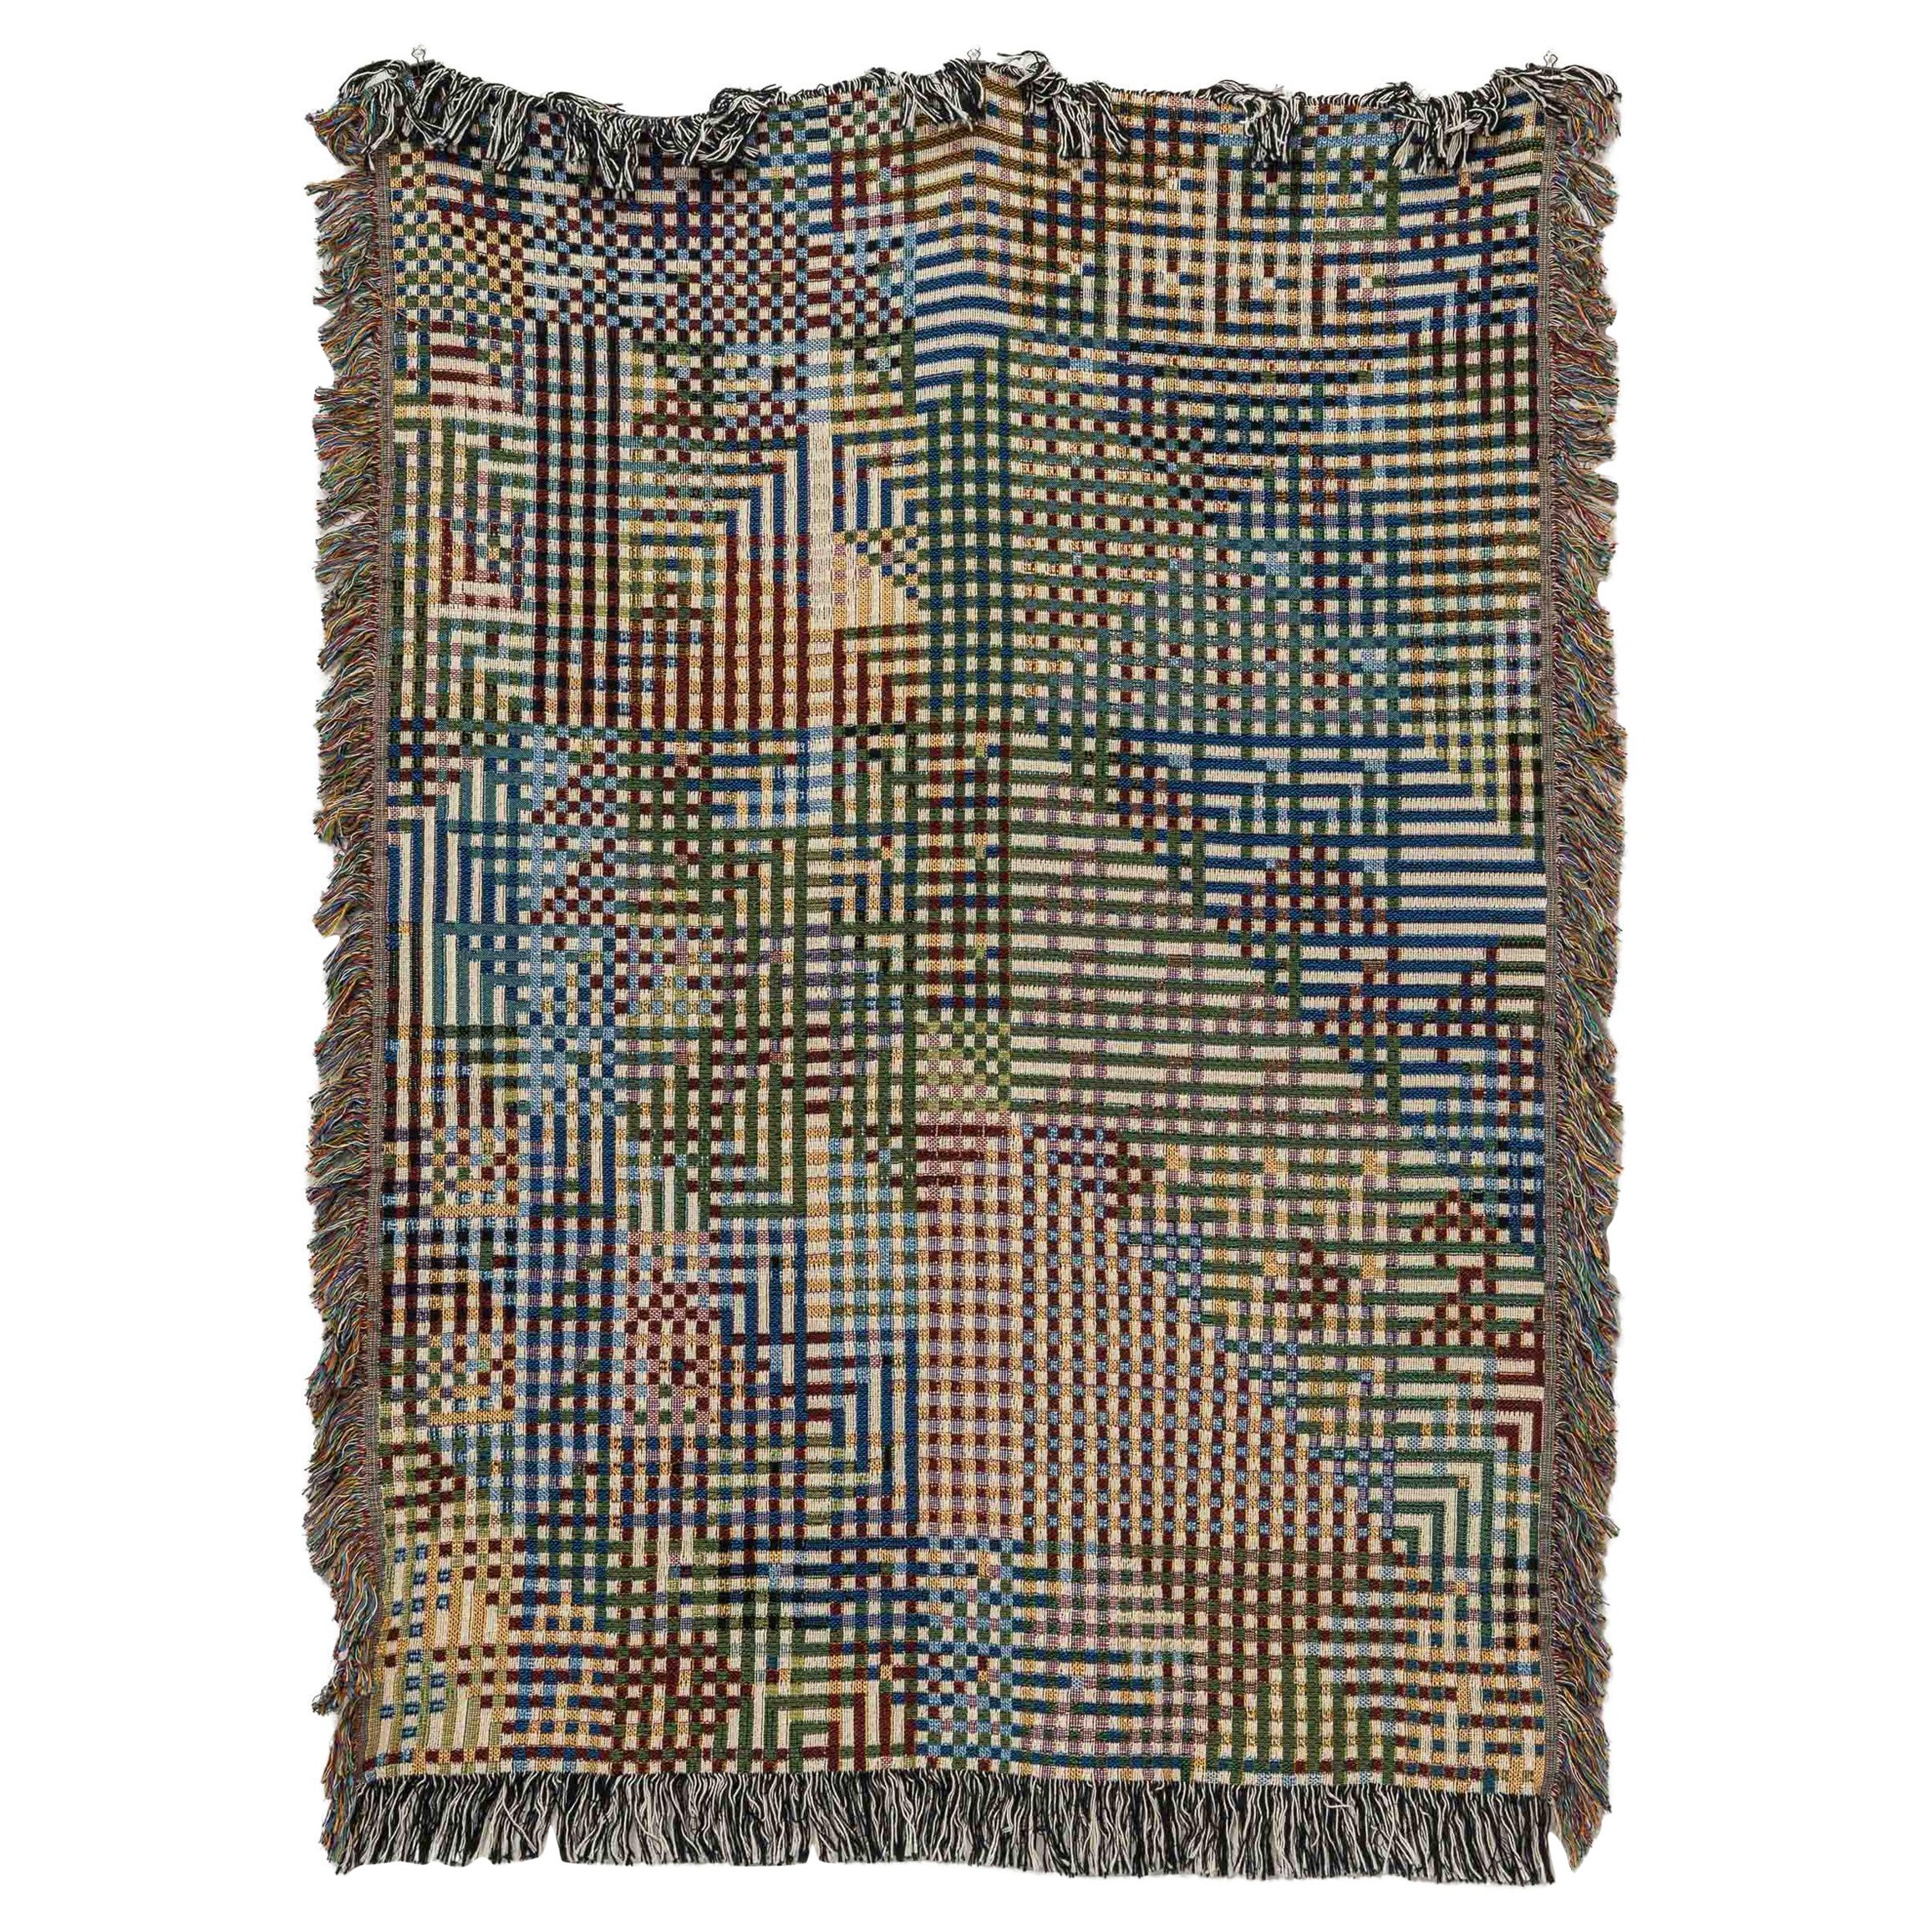 Bit Map Throw Blanket 03, 100% Baumwolle Woven Contemporary Pixel Art, 60 "x80"